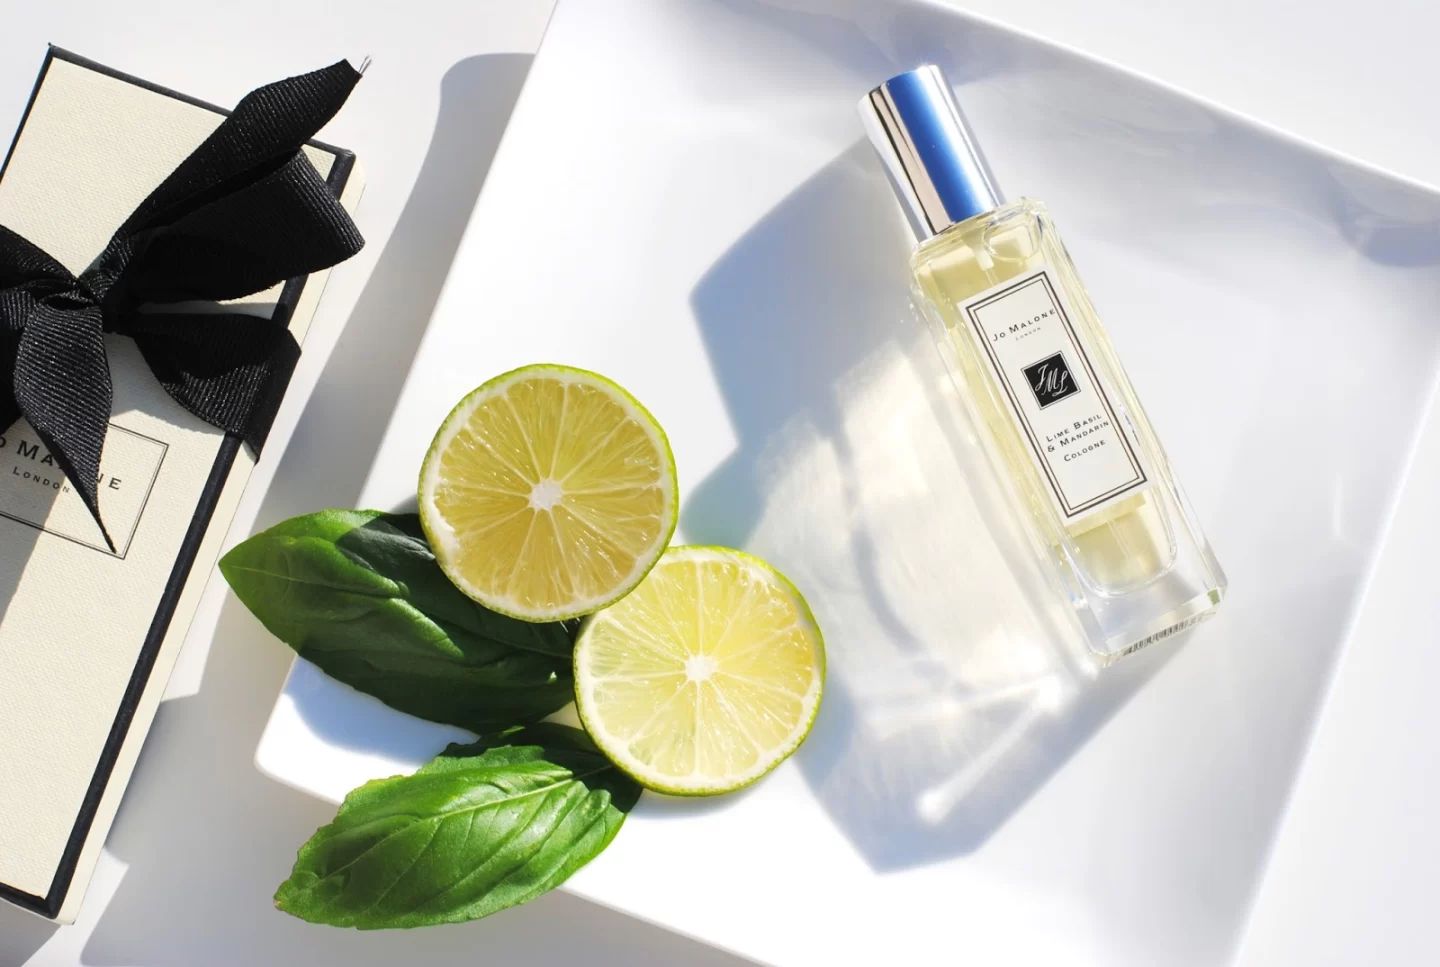 Best Lime Perfumes
Jo Malone London Lime Basil & Mandarin 